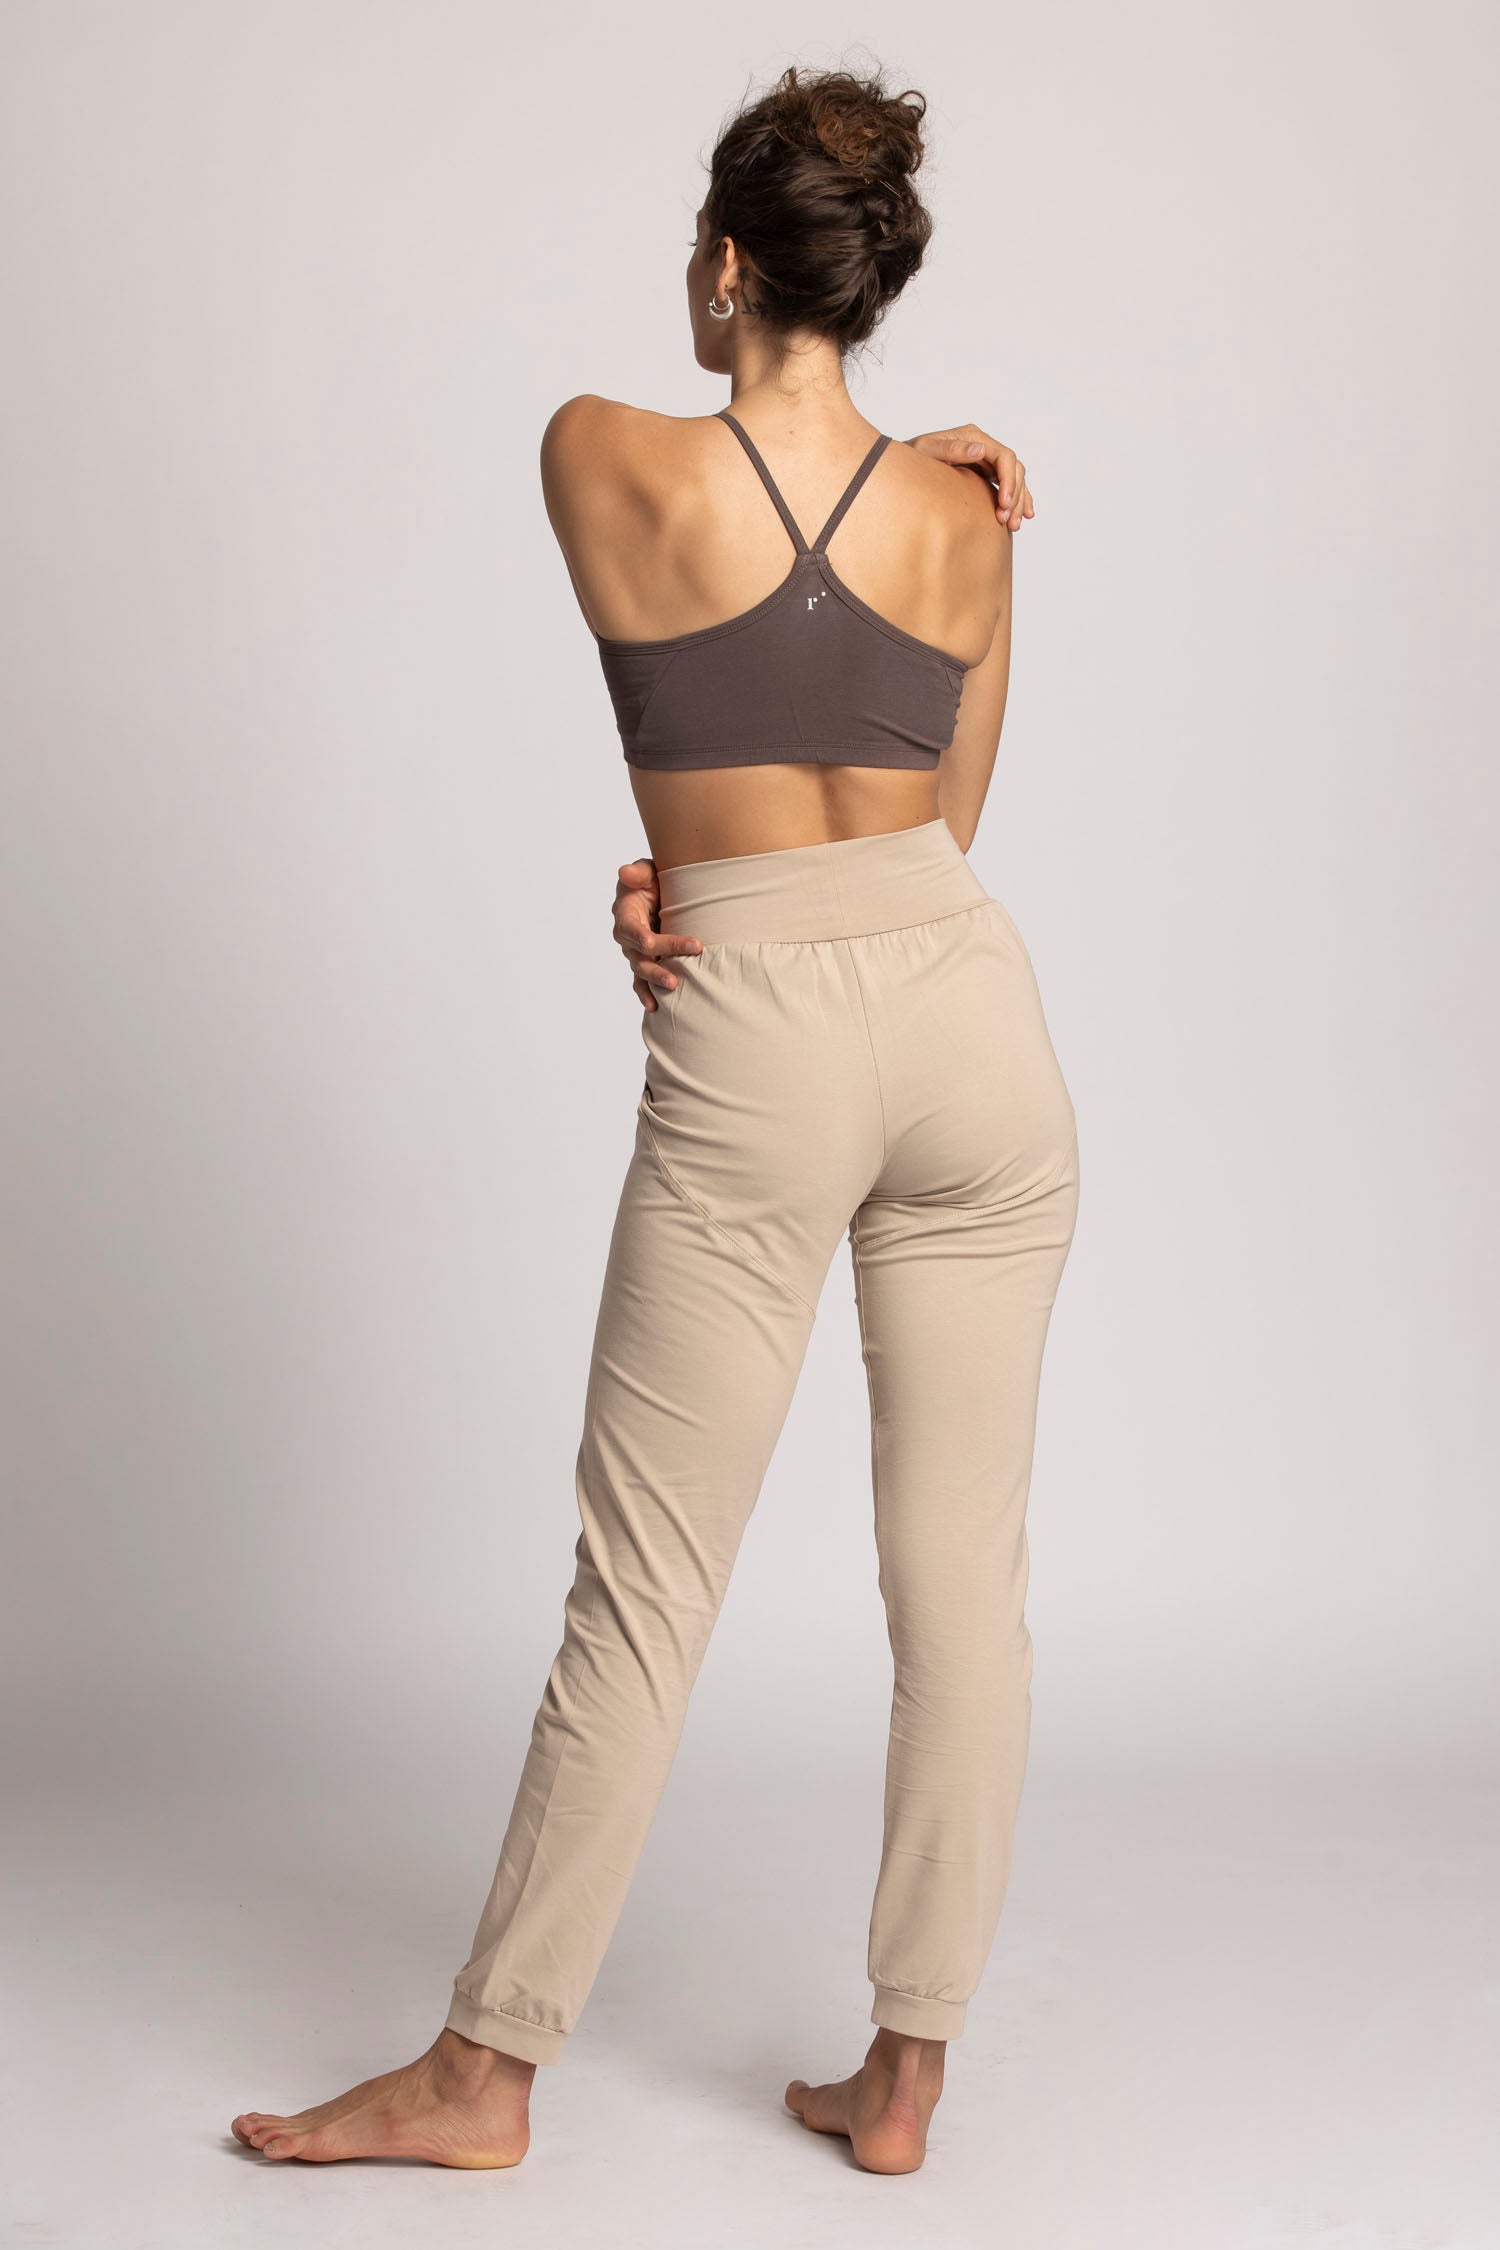 PROYOG Women's Organic Yoga Pants (Beetroot, Medium) : : Clothing  & Accessories